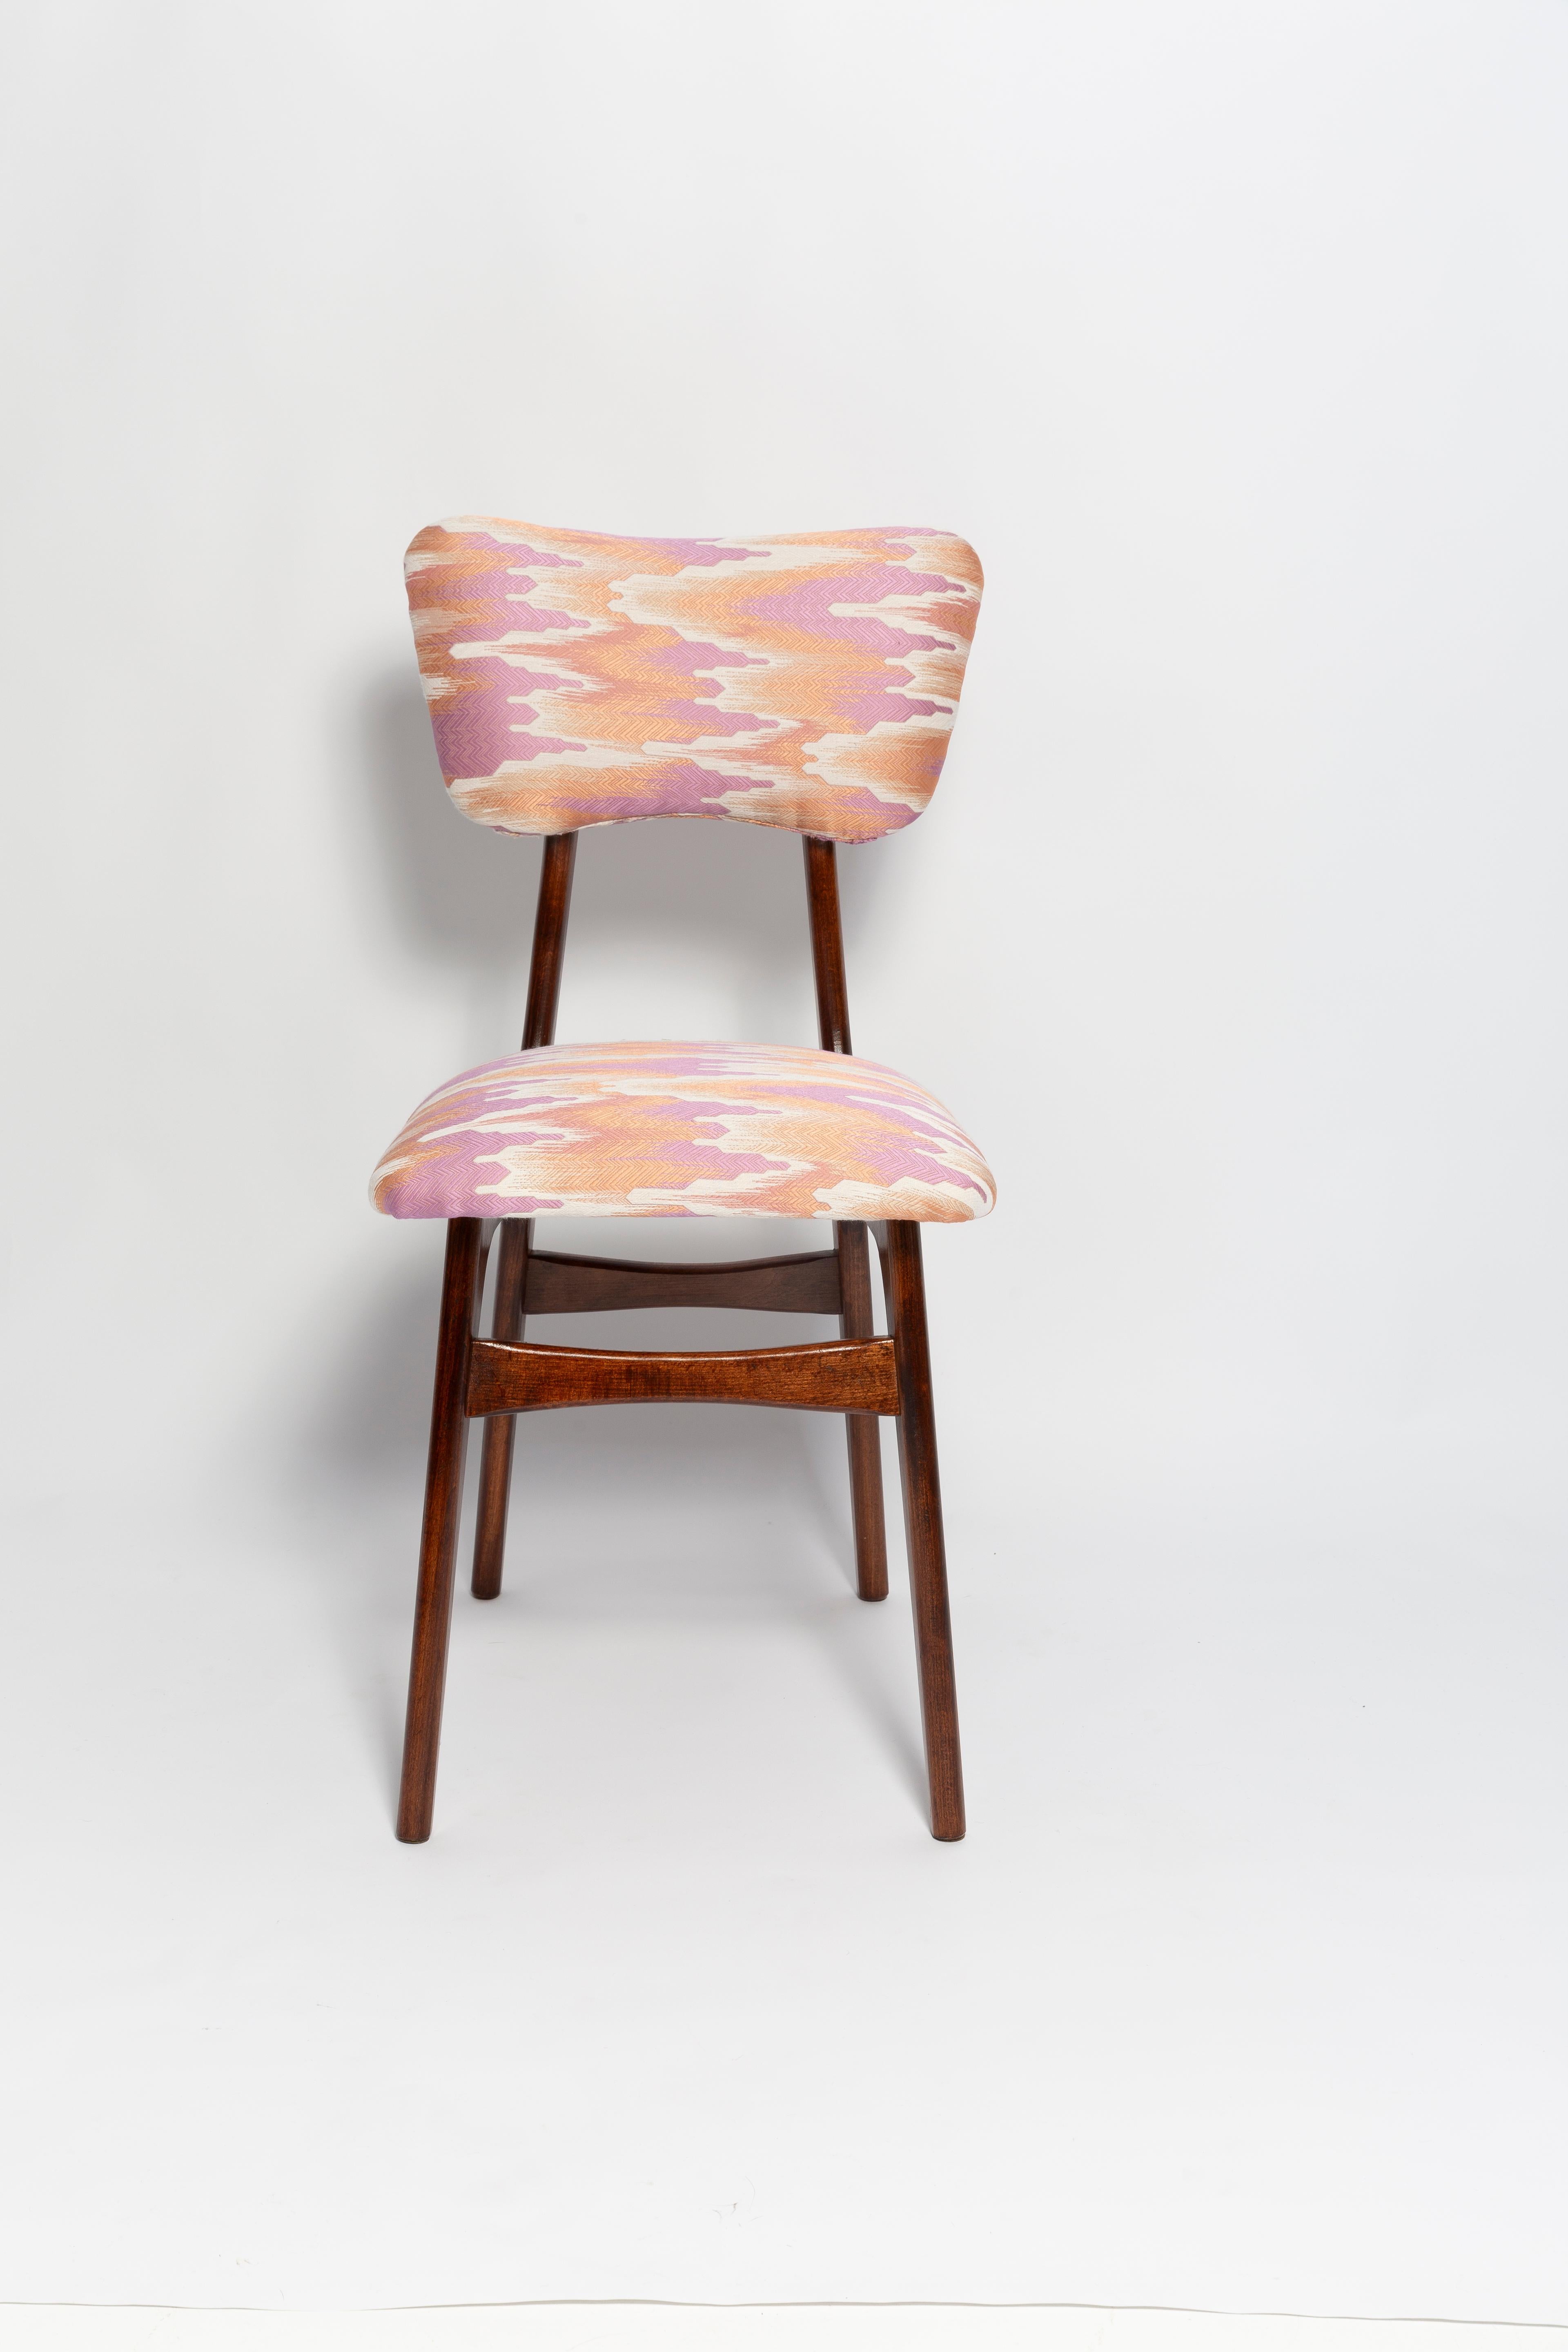 Polish Eight Mid Century Butterfly Chairs, Fandango Jacquard, Dark Wood, Europe, 1960s For Sale